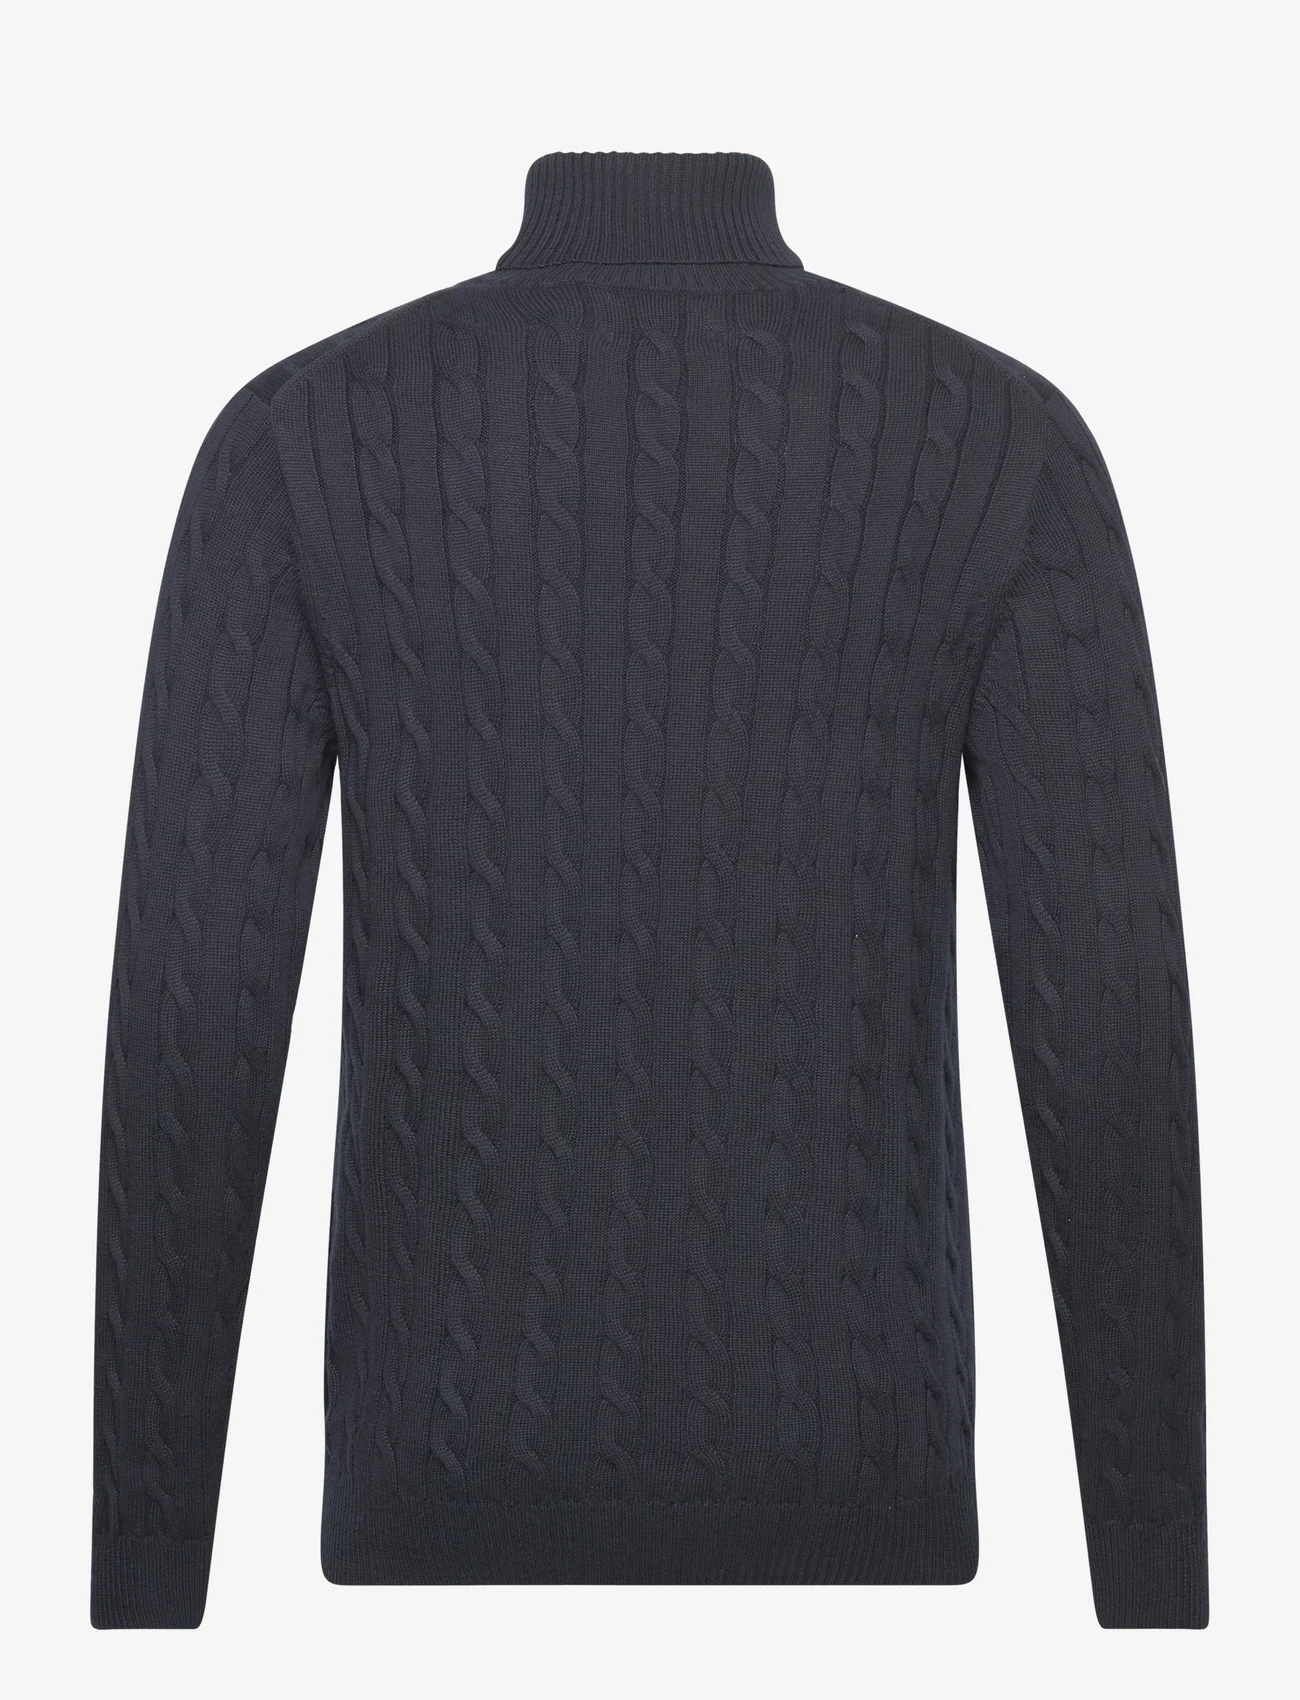 GANT - COTTON CABLE TURTLE NECK - džemperi ar augstu apkakli - evening blue - 1